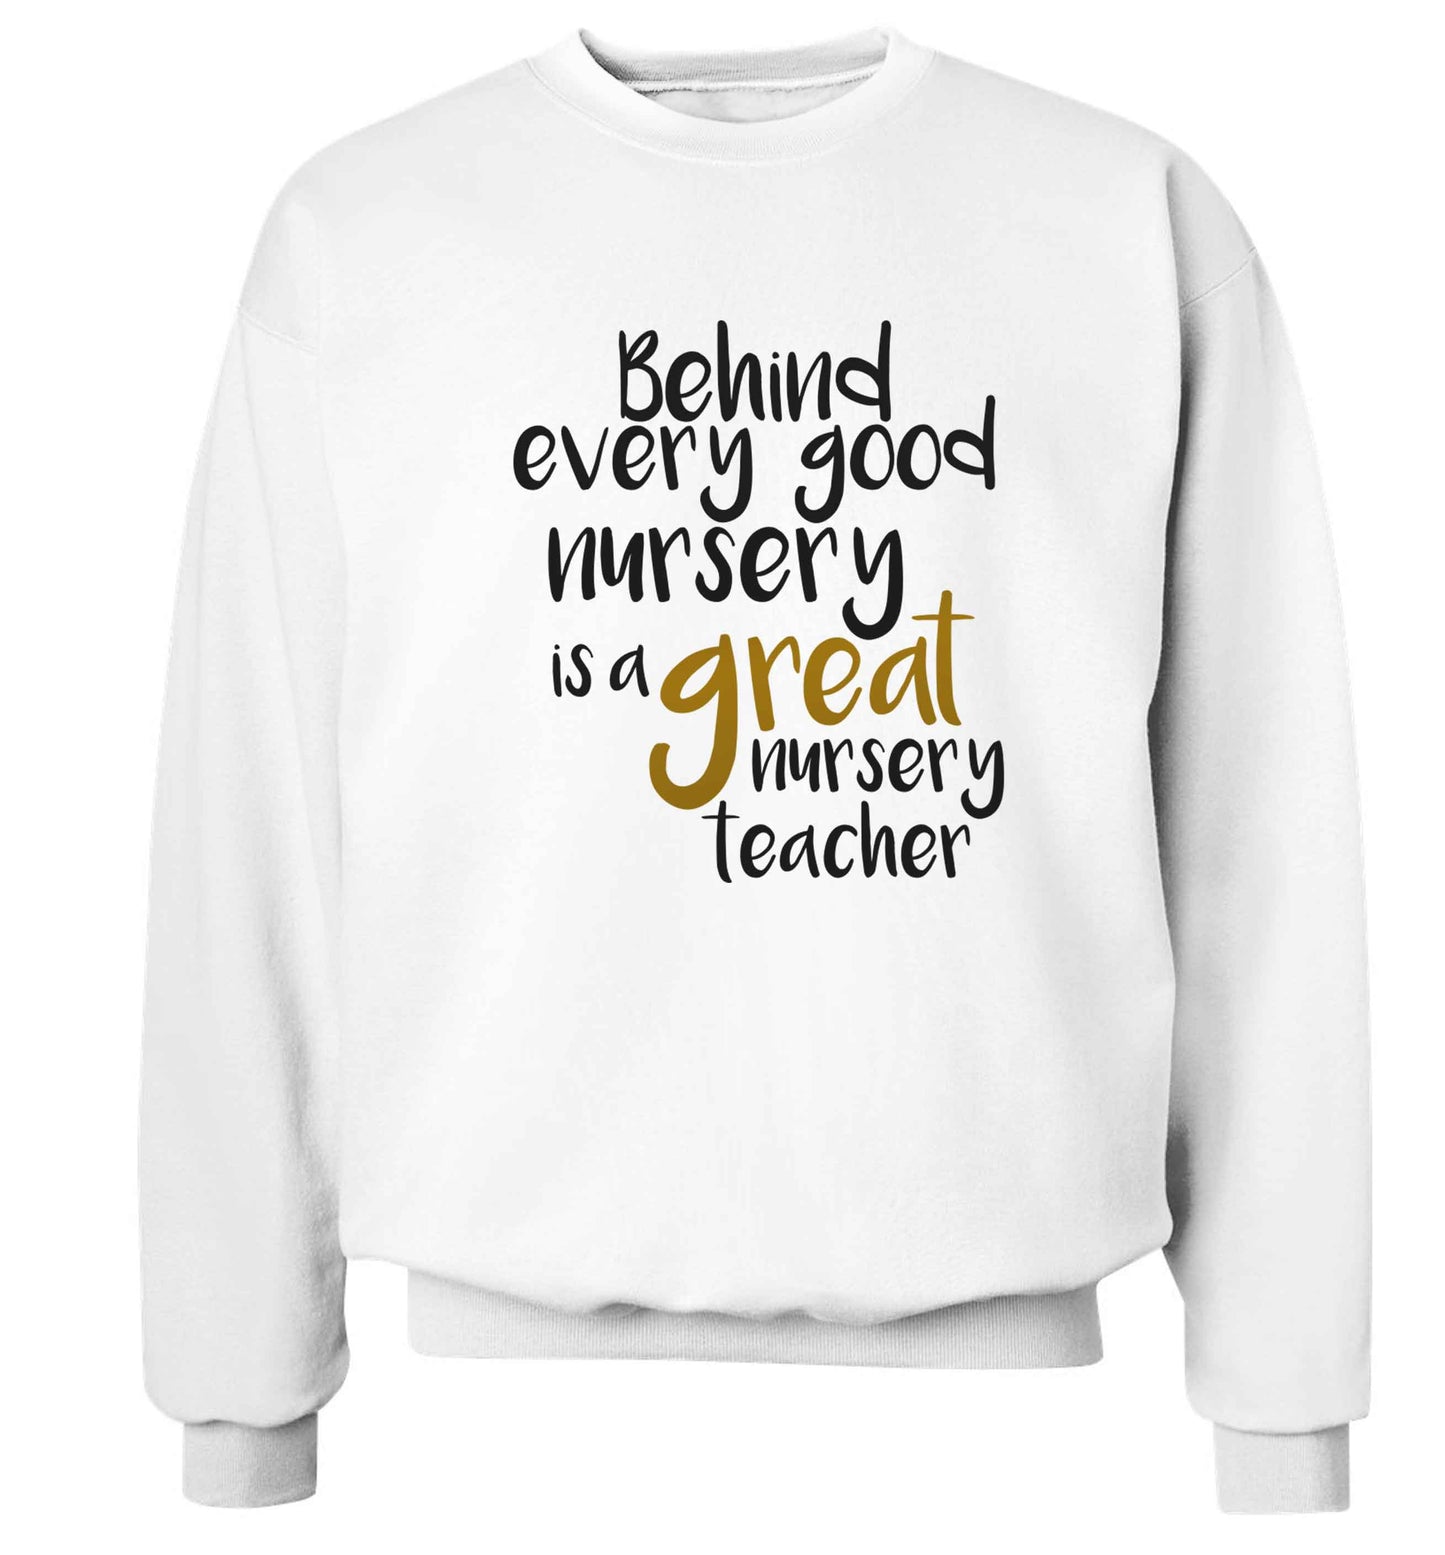 Behind every good nursery is a great nursery teacher Adult's unisex white Sweater 2XL